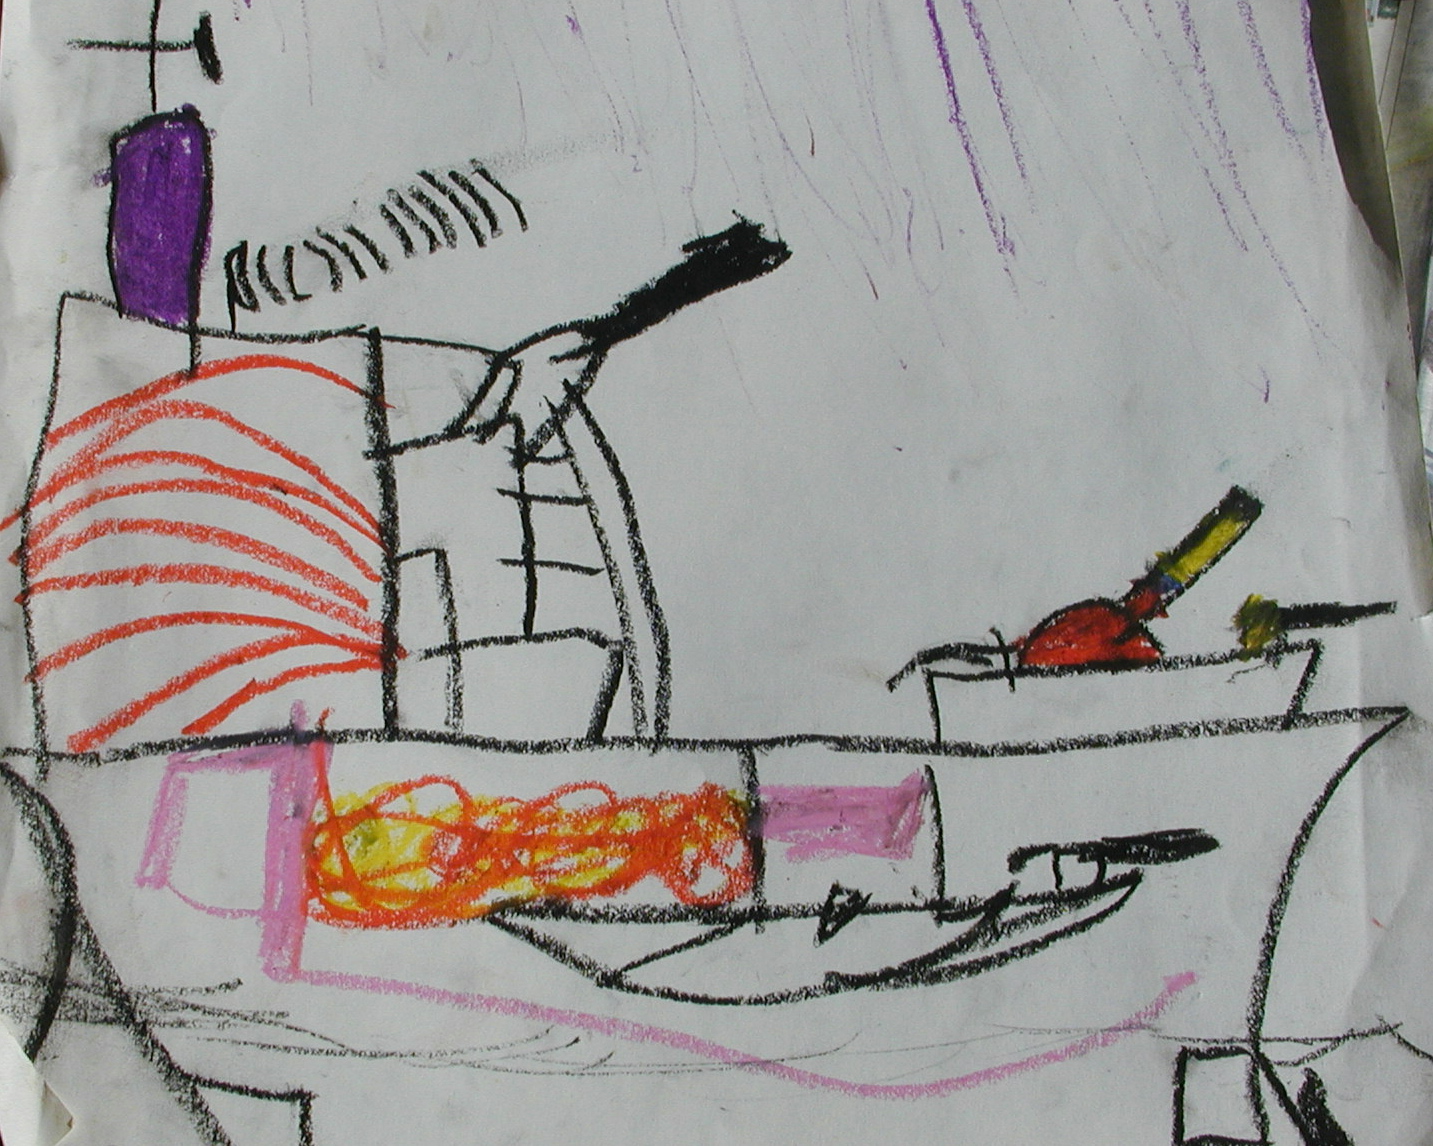 A child's imipression of a battleship